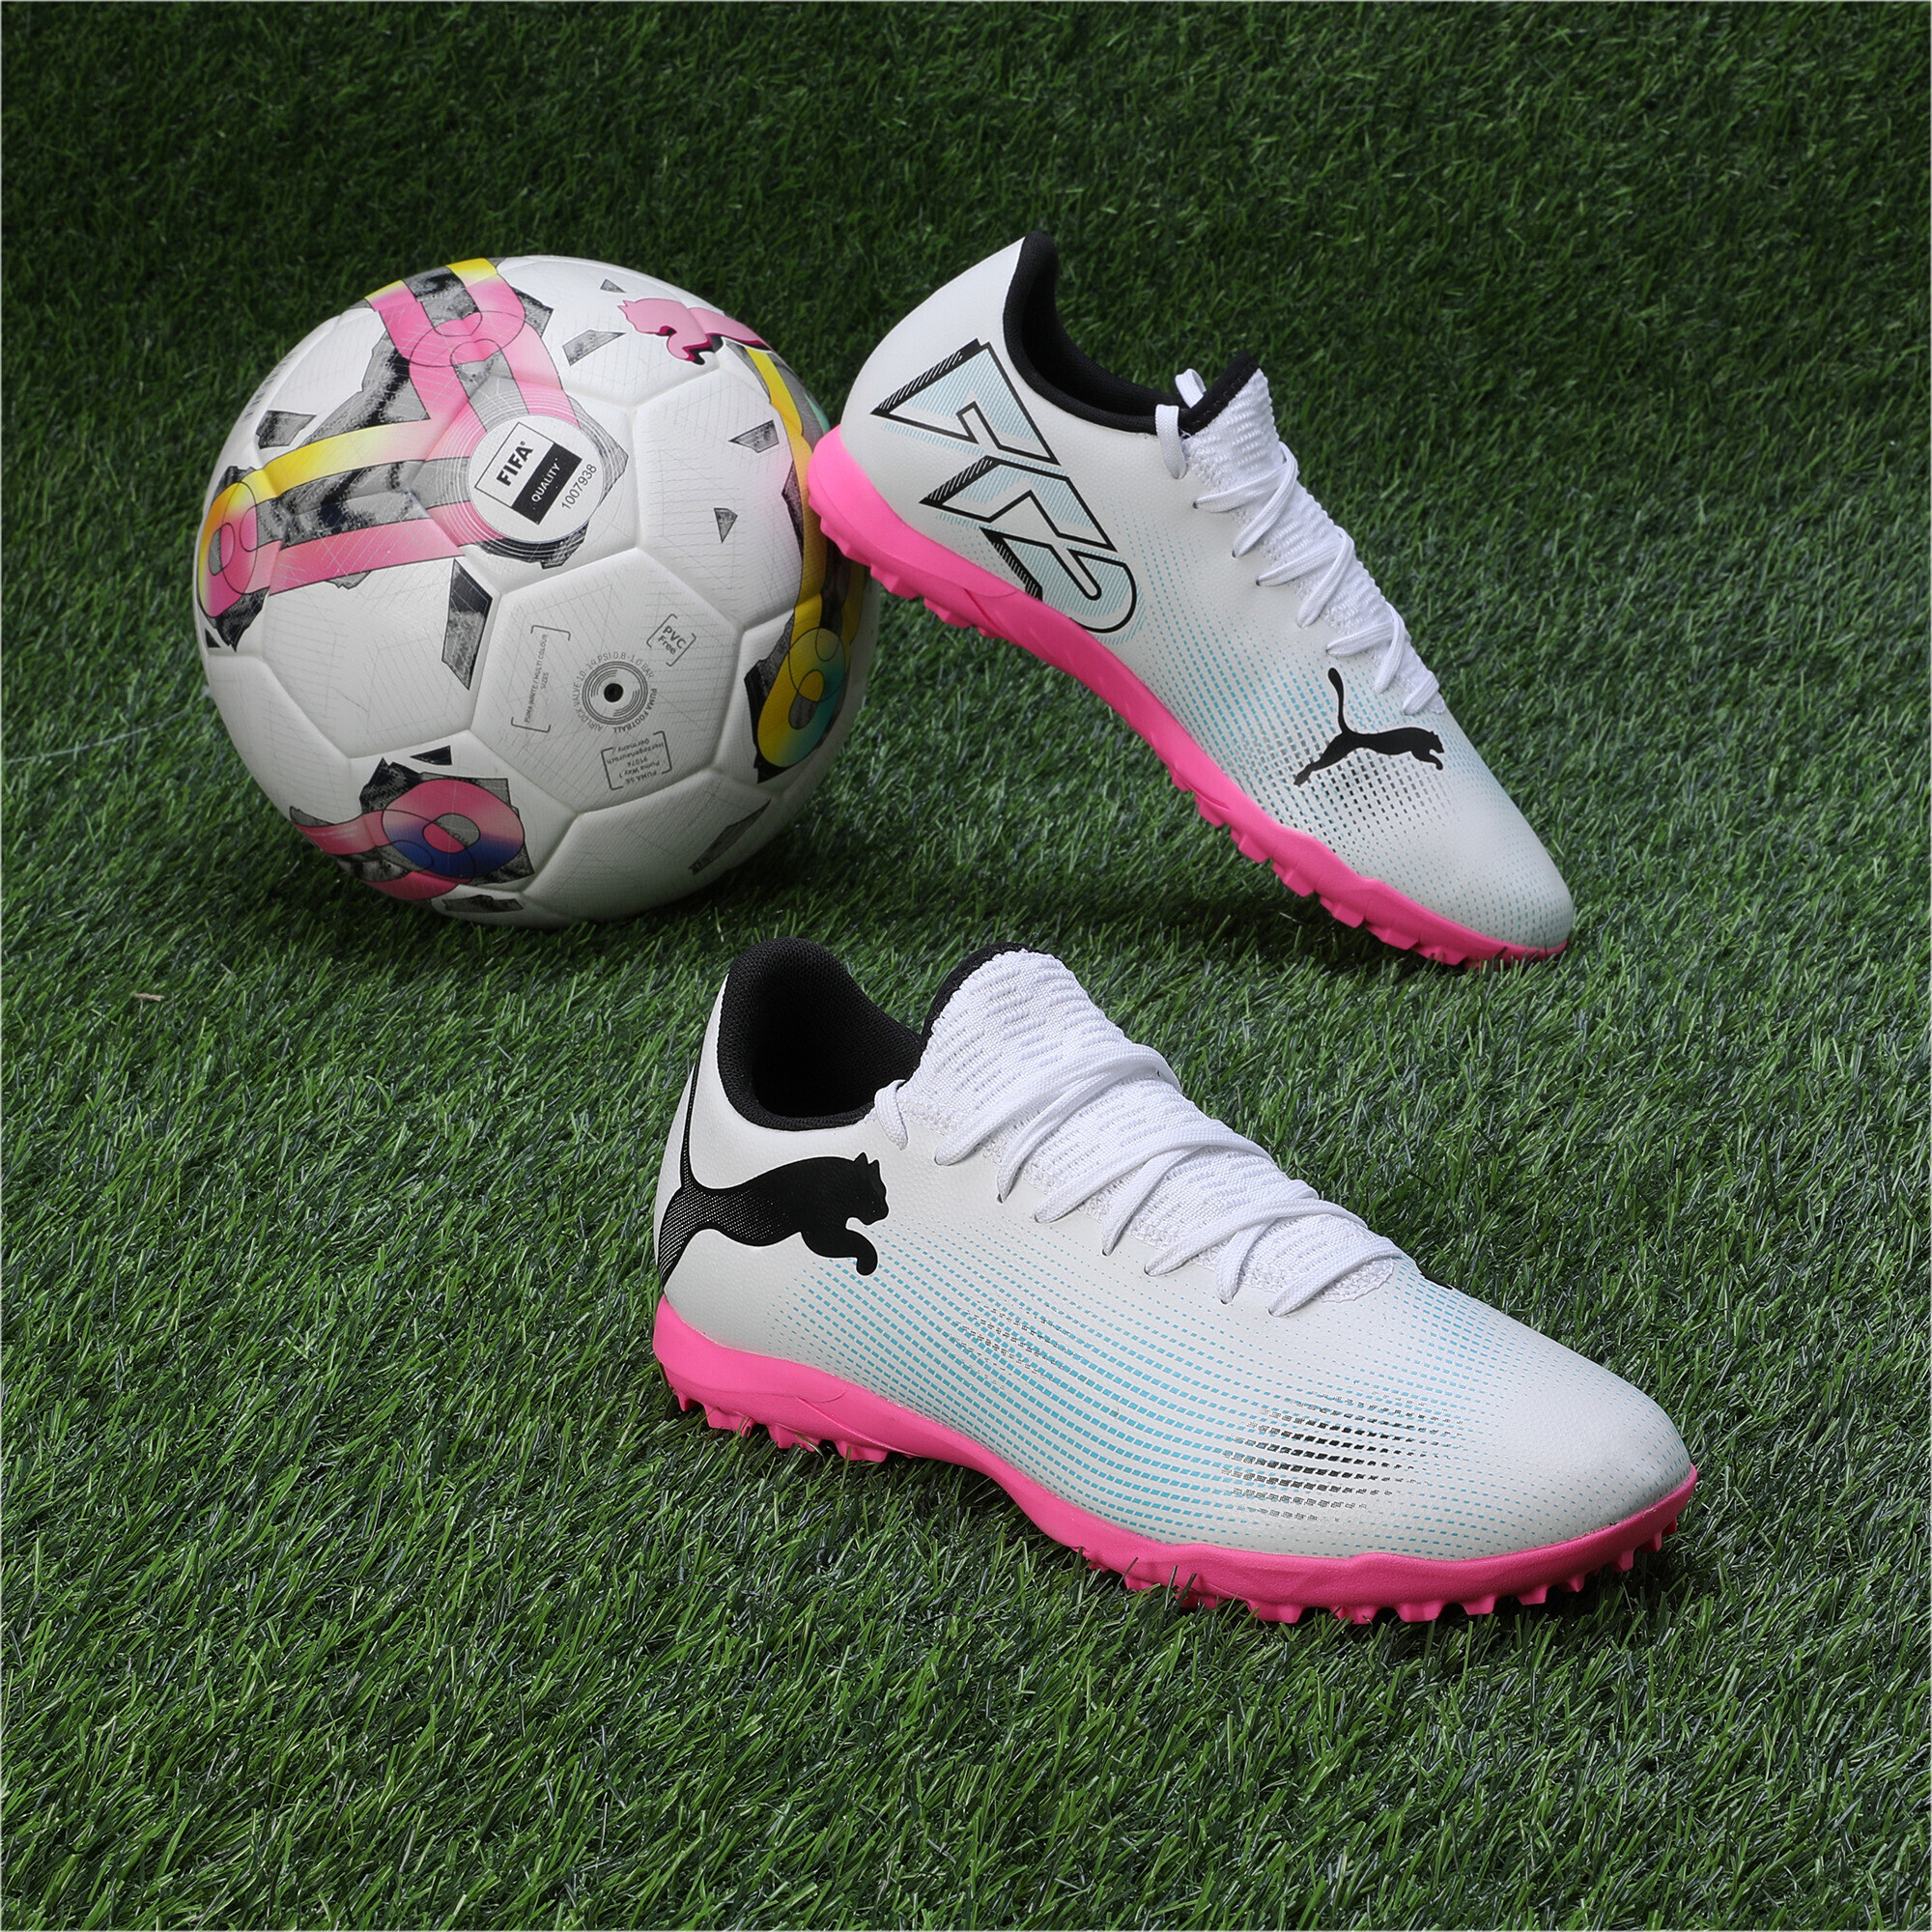 Men's PUMA FUTURE 7 PLAY TT Football Boots In White/Pink, Size EU 44.5